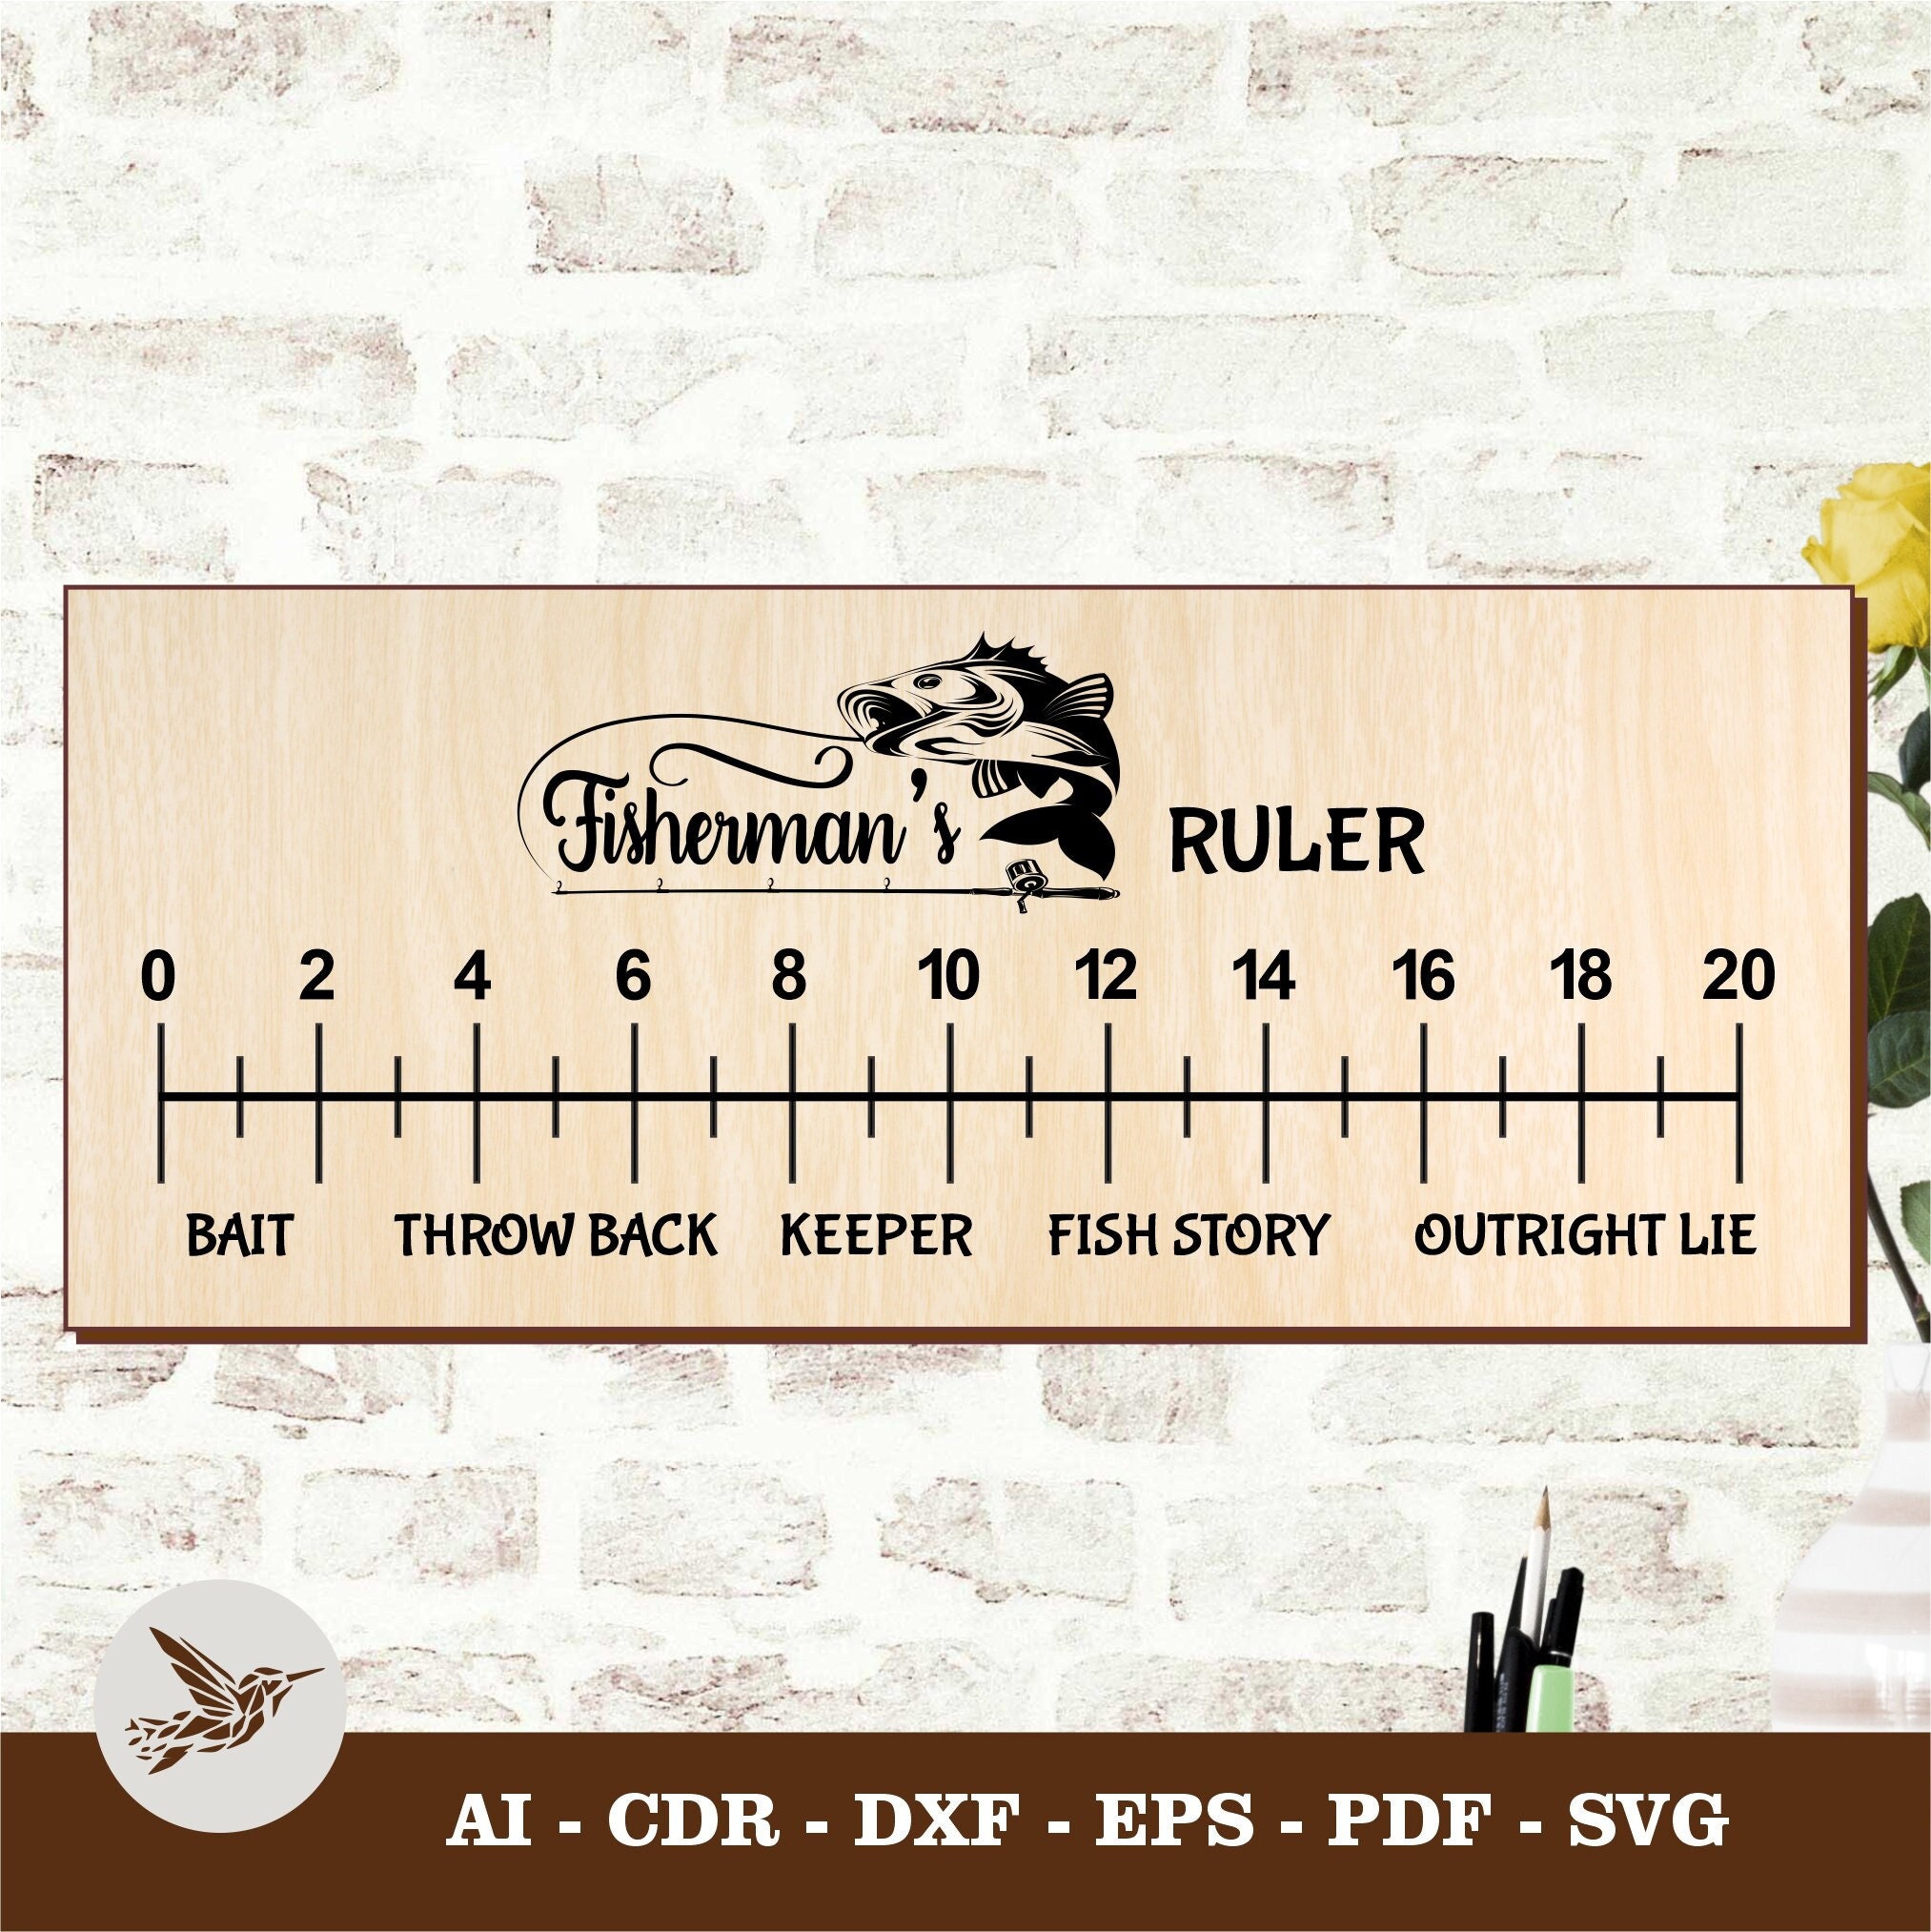 THE JUDGE Ruler MALE Enhancement Ruler 6 Inch Ruler Funny Gag Gift